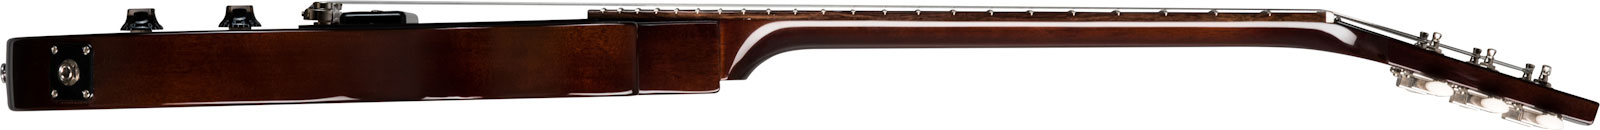 Gibson Les Paul Junior Original P90 Ht Rw - Vintage Tobacco Burst - Enkel gesneden elektrische gitaar - Variation 2